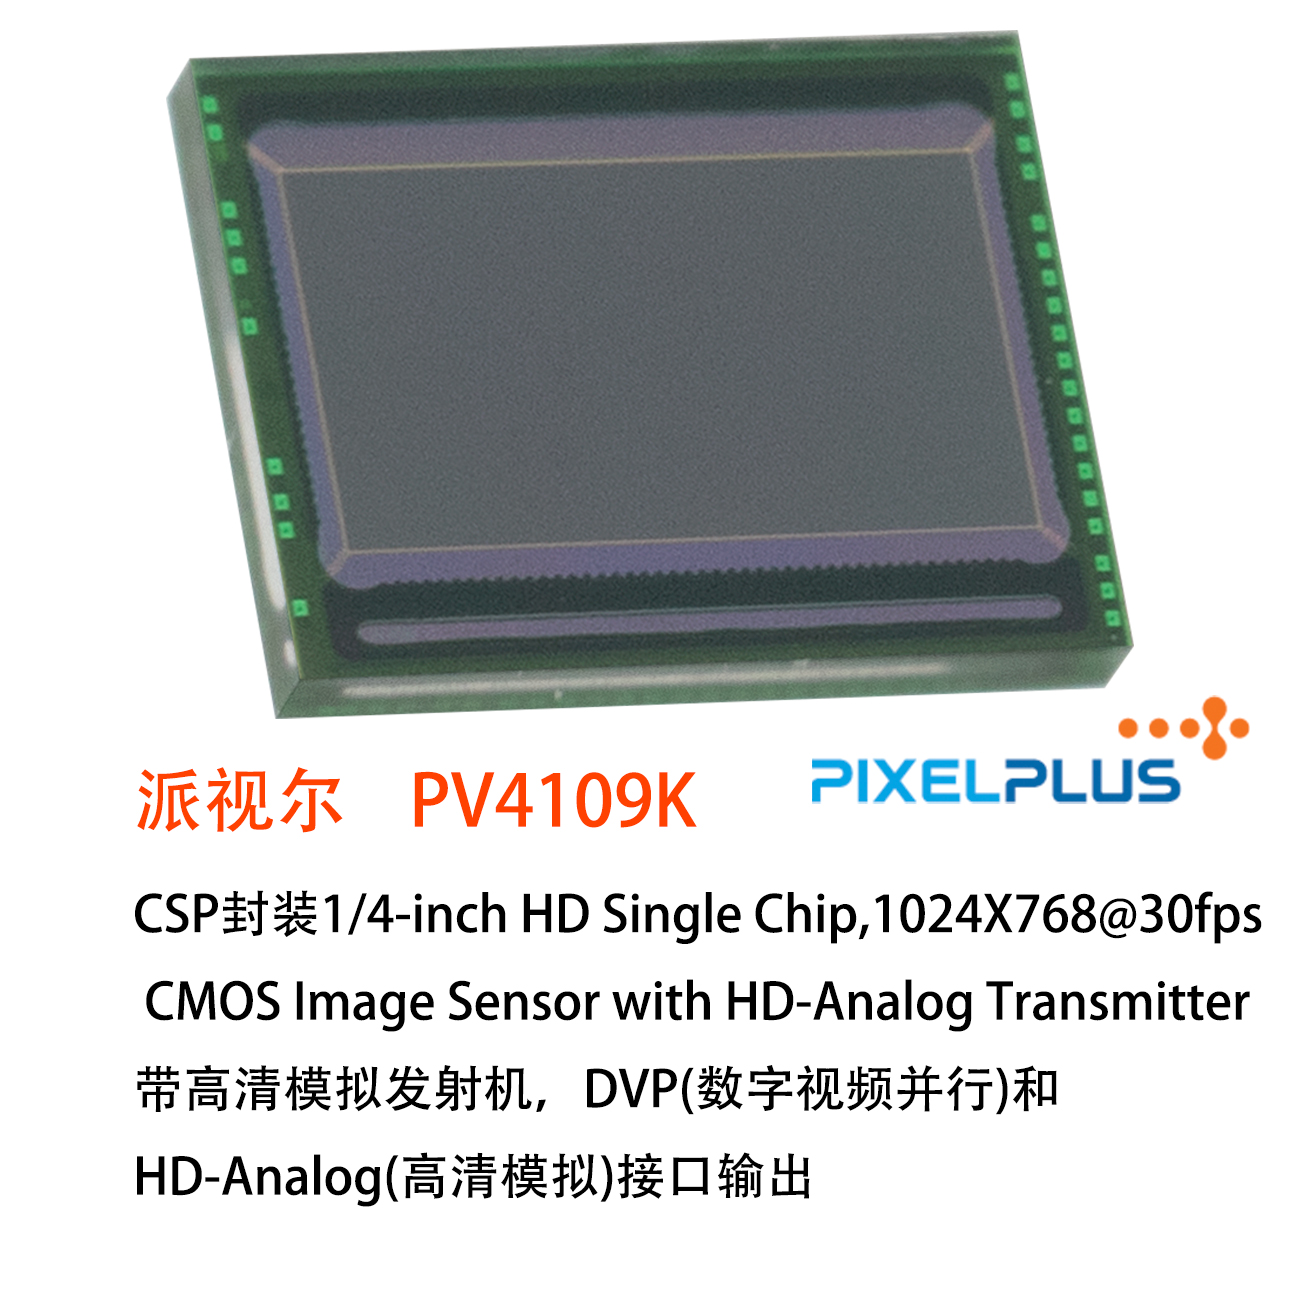 PV4109K, PIXELPLUS CMOS, CSP 1/4-inch Ssensor, HD Single Chip CMOS Image Sensor, with HD-Analog Transmitter cmos sensor, PIXELPLUS 1024X768@30fps analog sensor, DVP(Digital Video parallel) and HD-Analog interface output image sensor